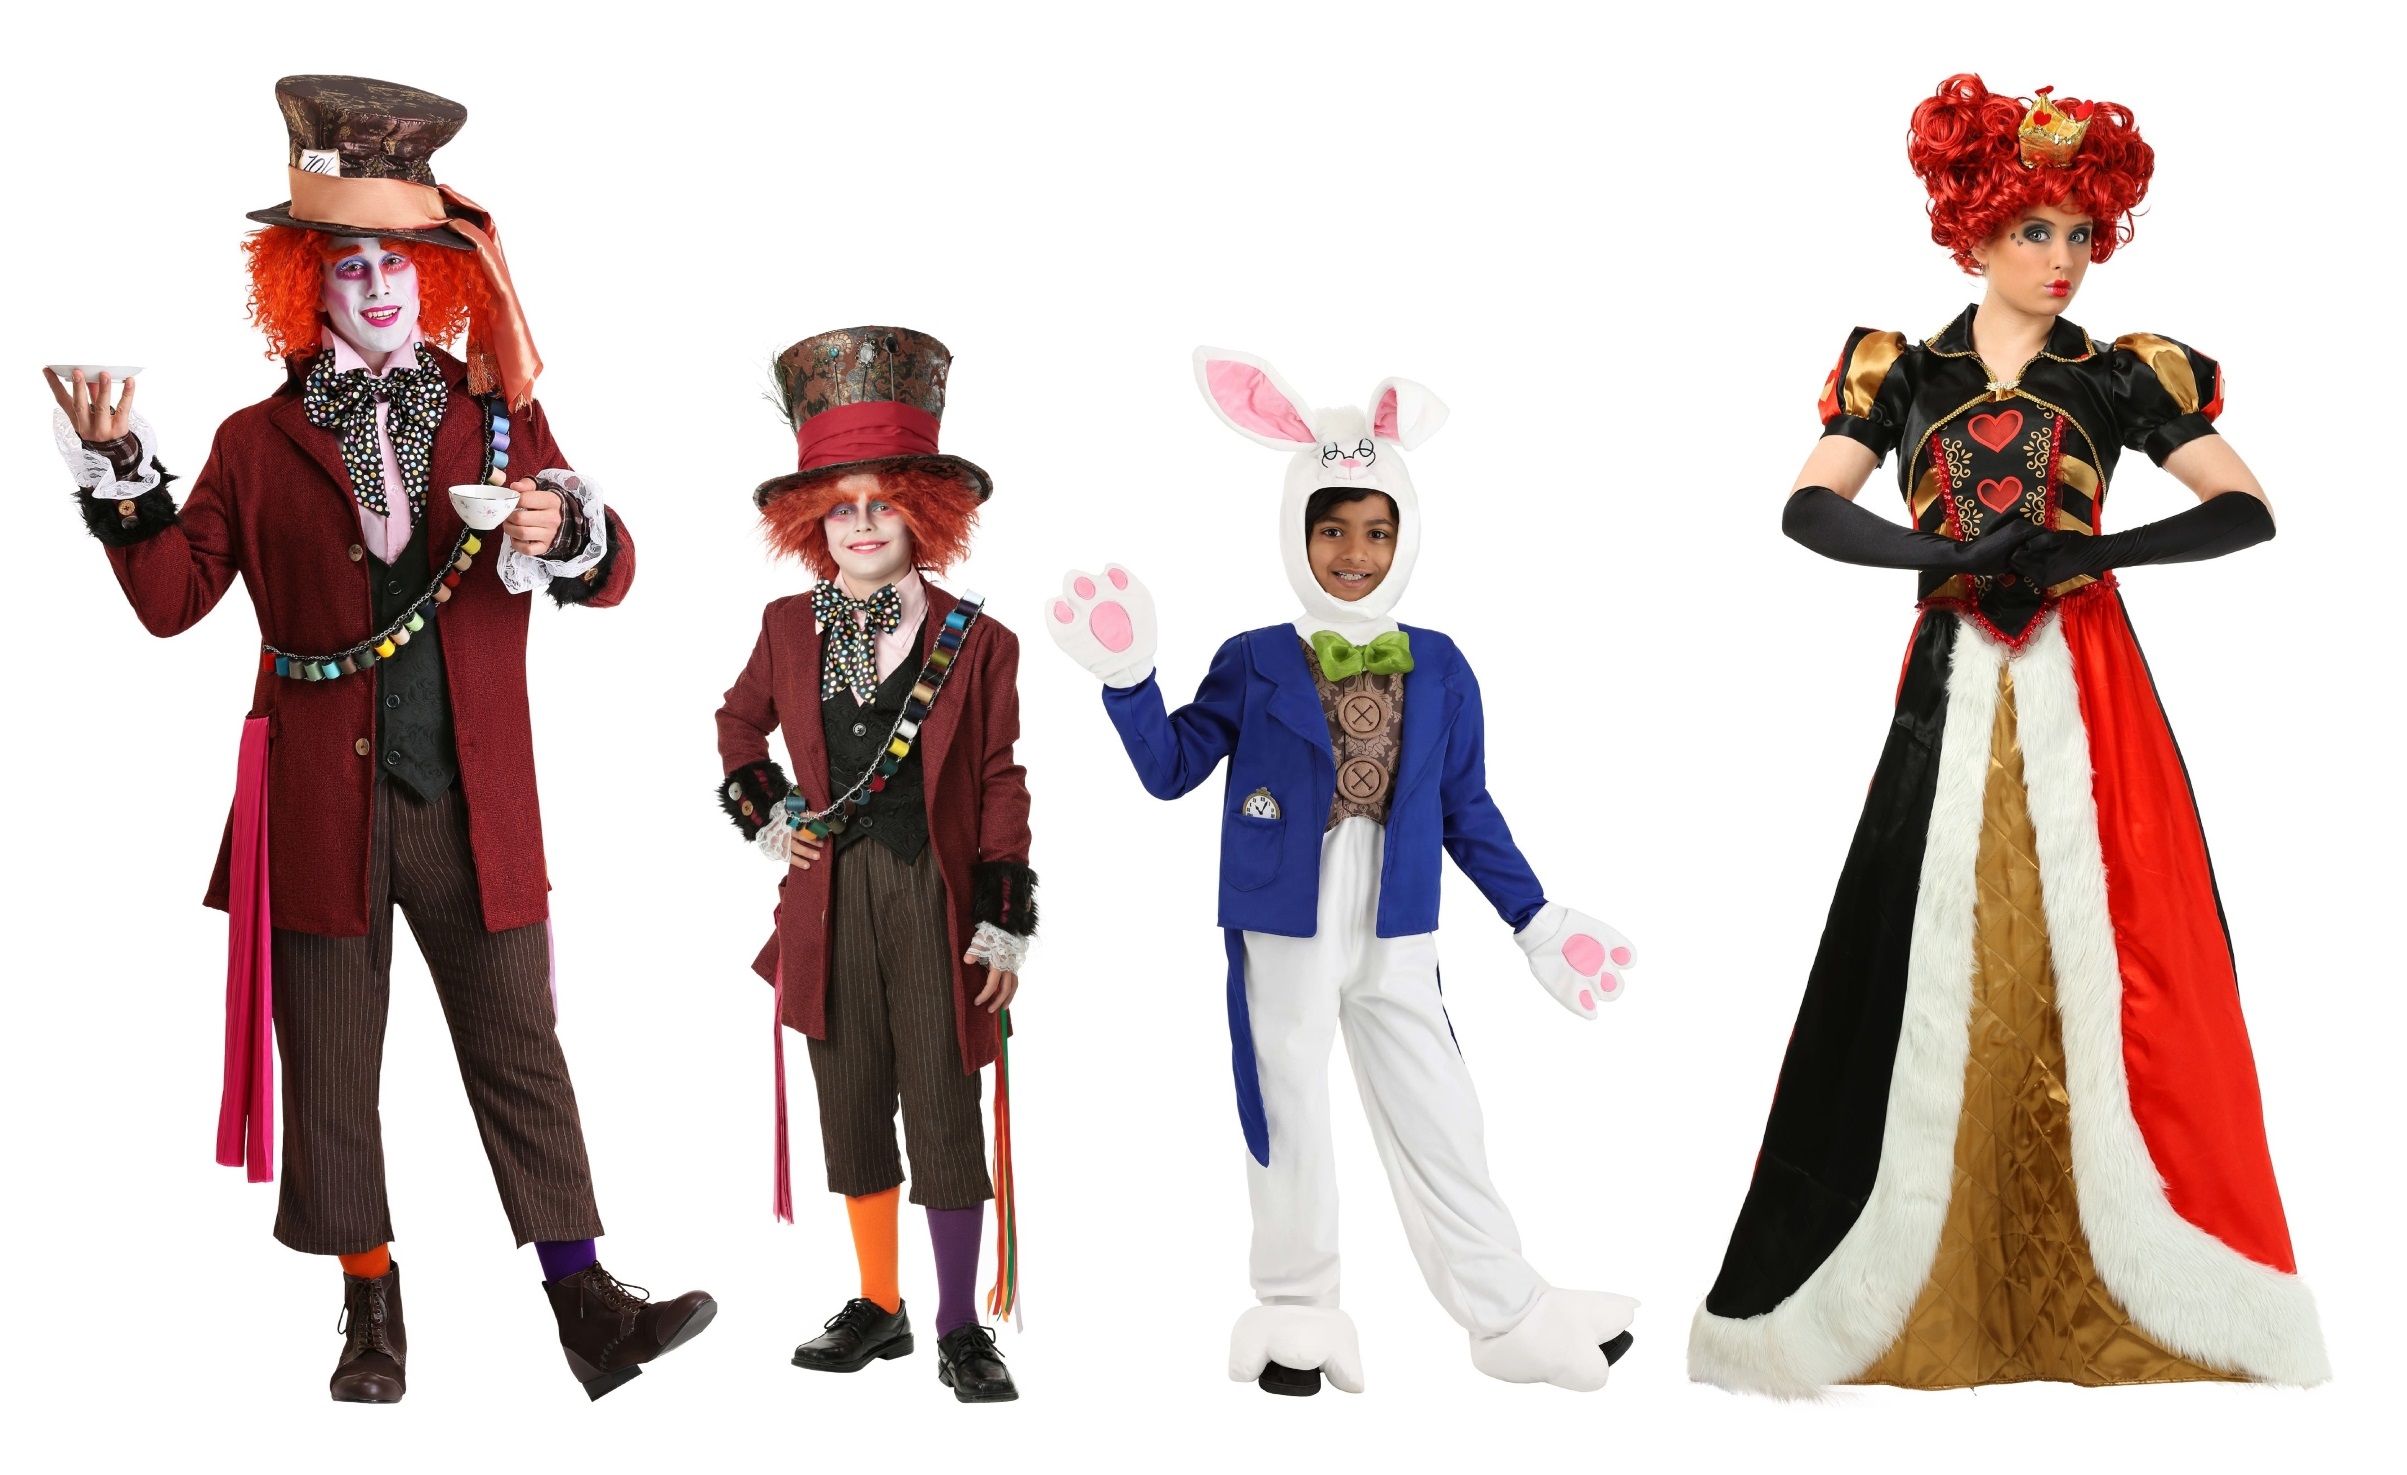 10 Tim Burton Costumes for Halloween - HalloweenCostumes.com Blog